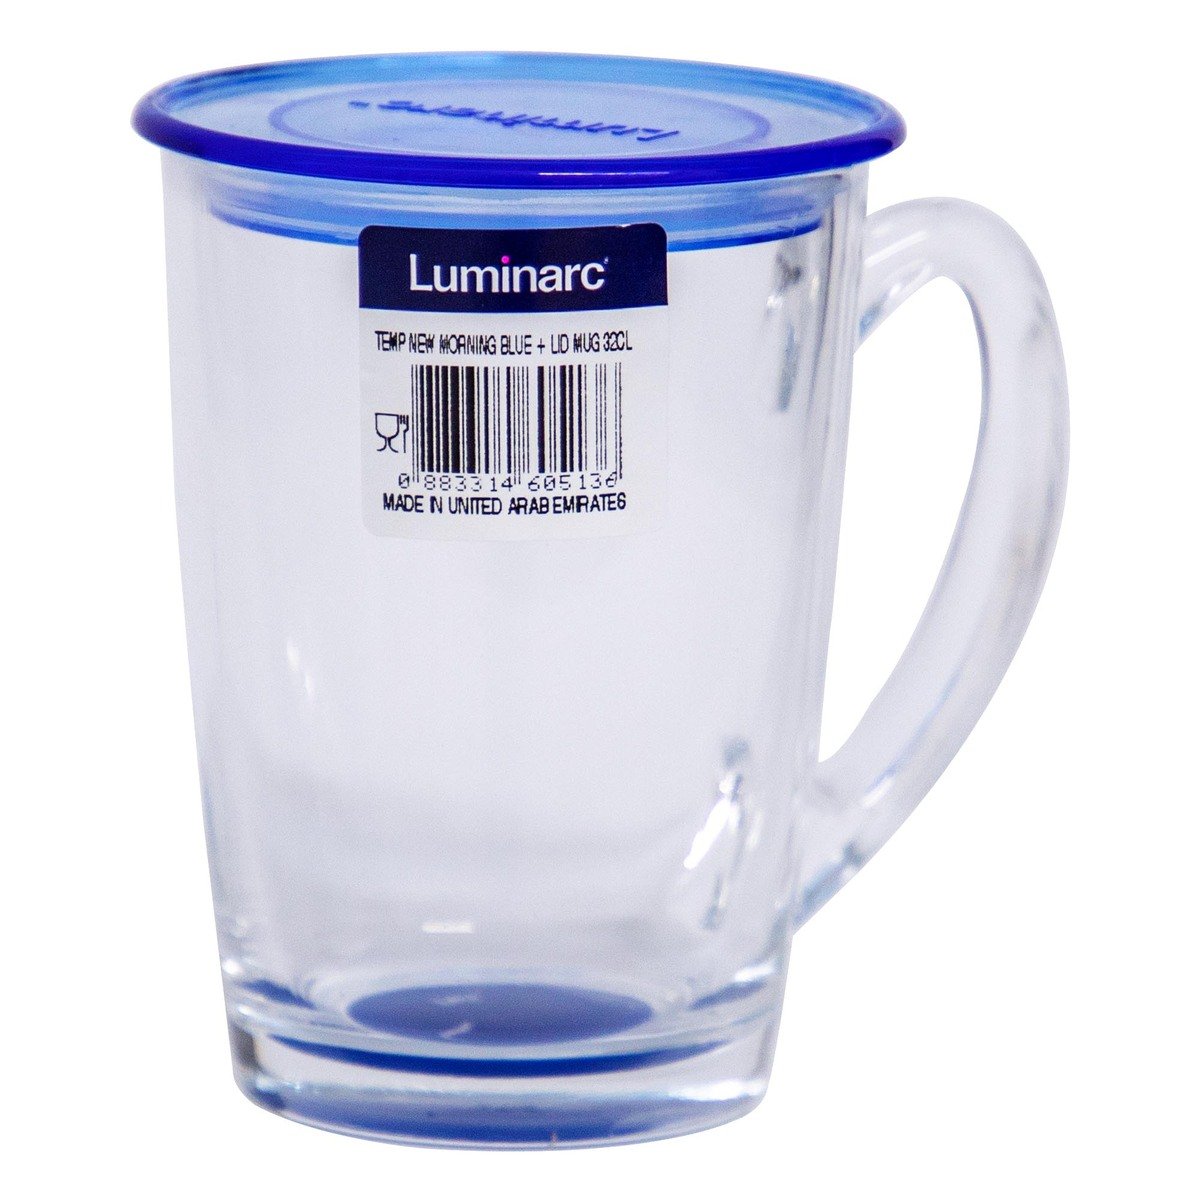 Luminarc Mug with Lid New Morning Blue 833 32cl